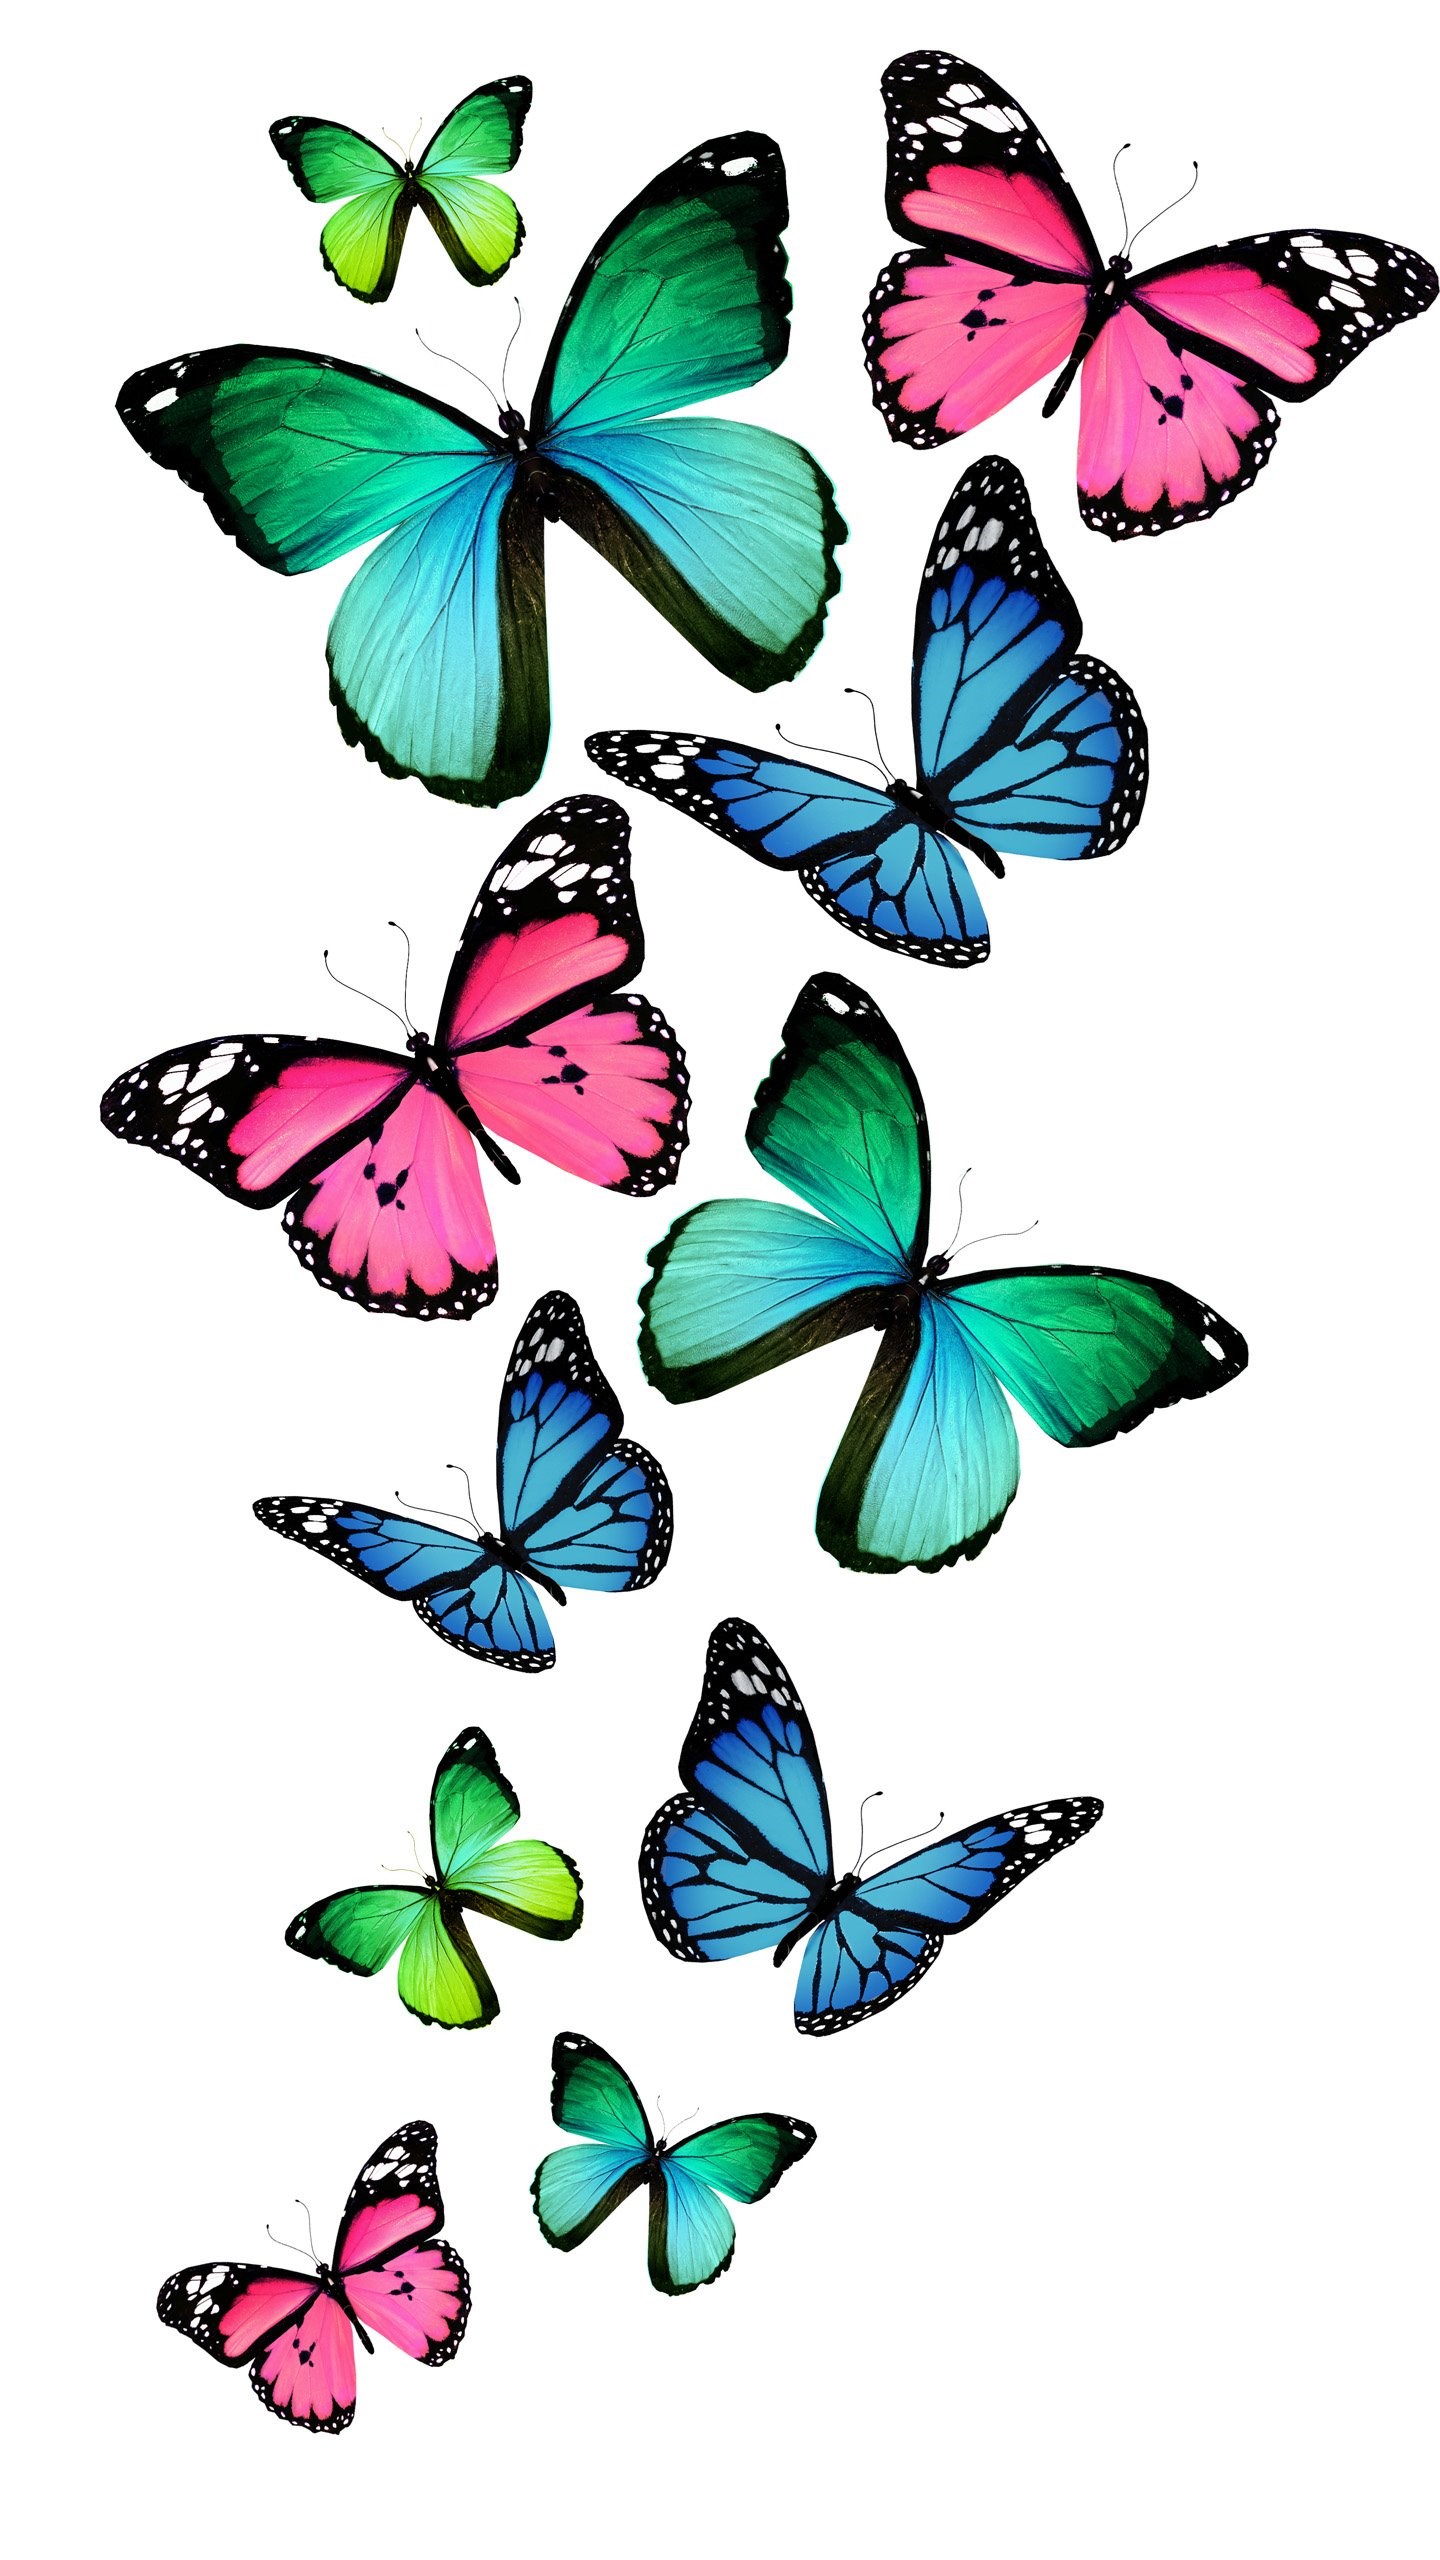 Colorful Butterfly Art Nexus 6 Wallpaper, Nexus 6 Wallpaper And. Desktop Background